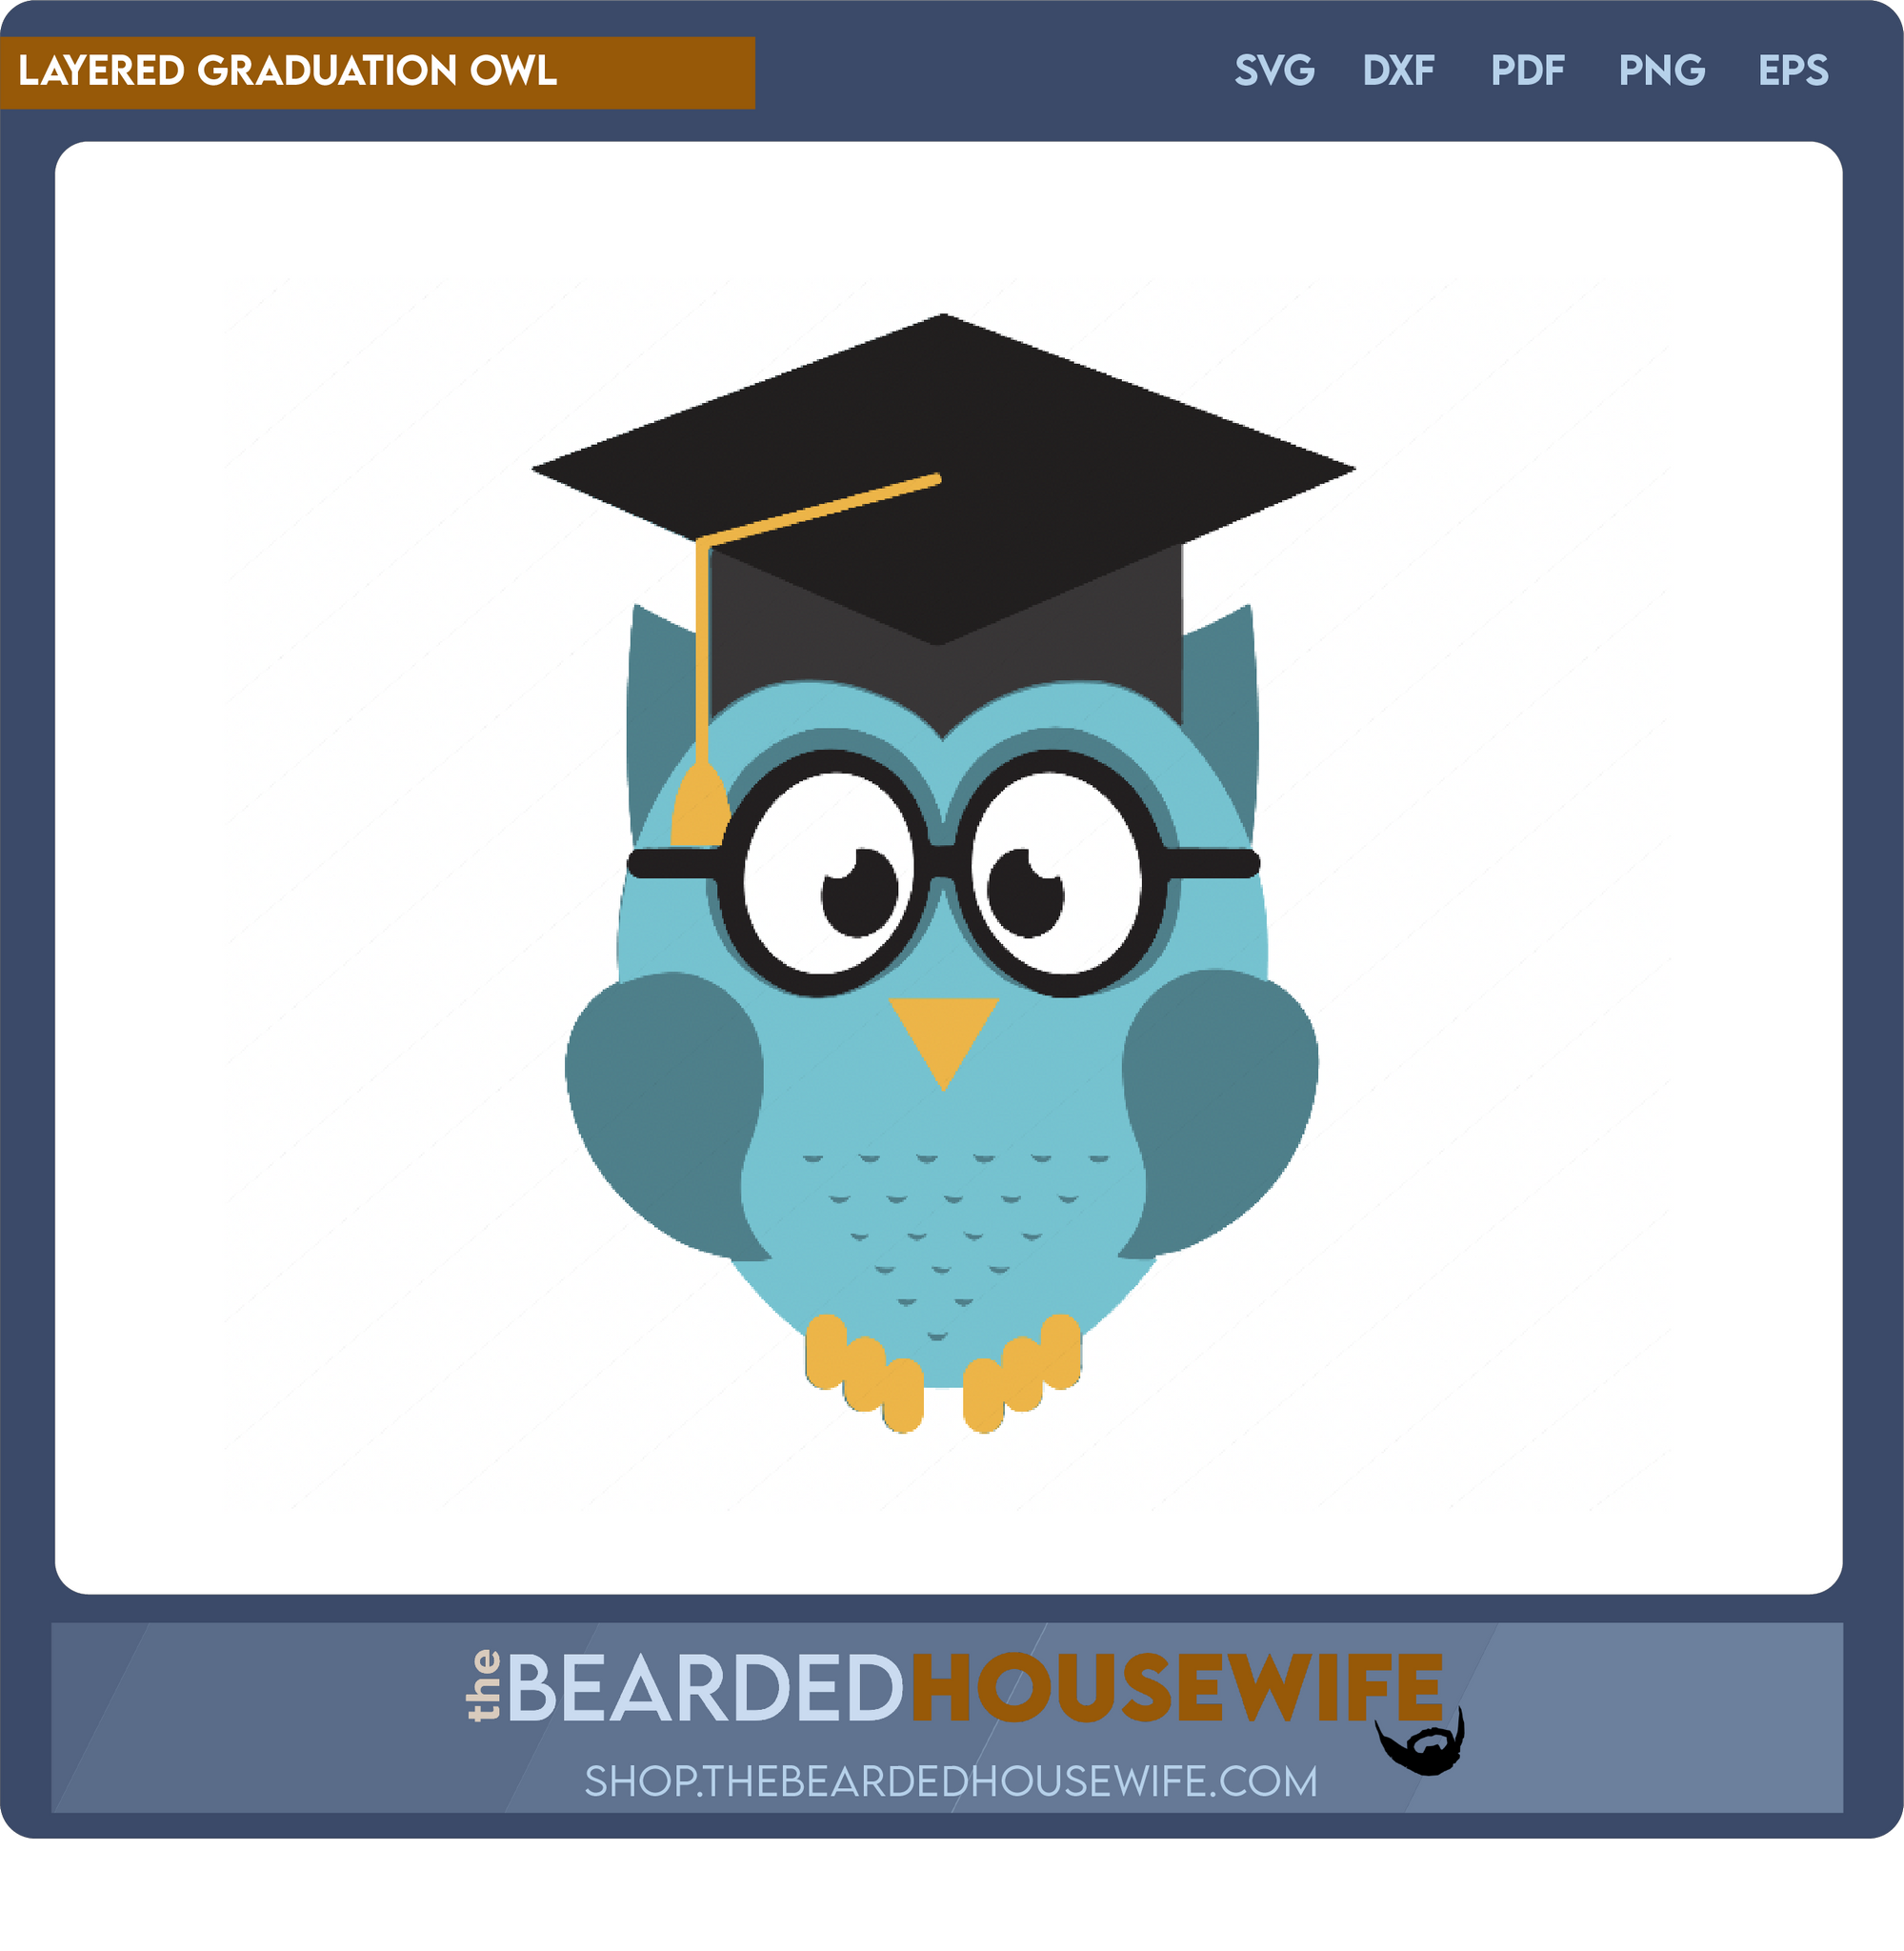 Layered Graduation Owl